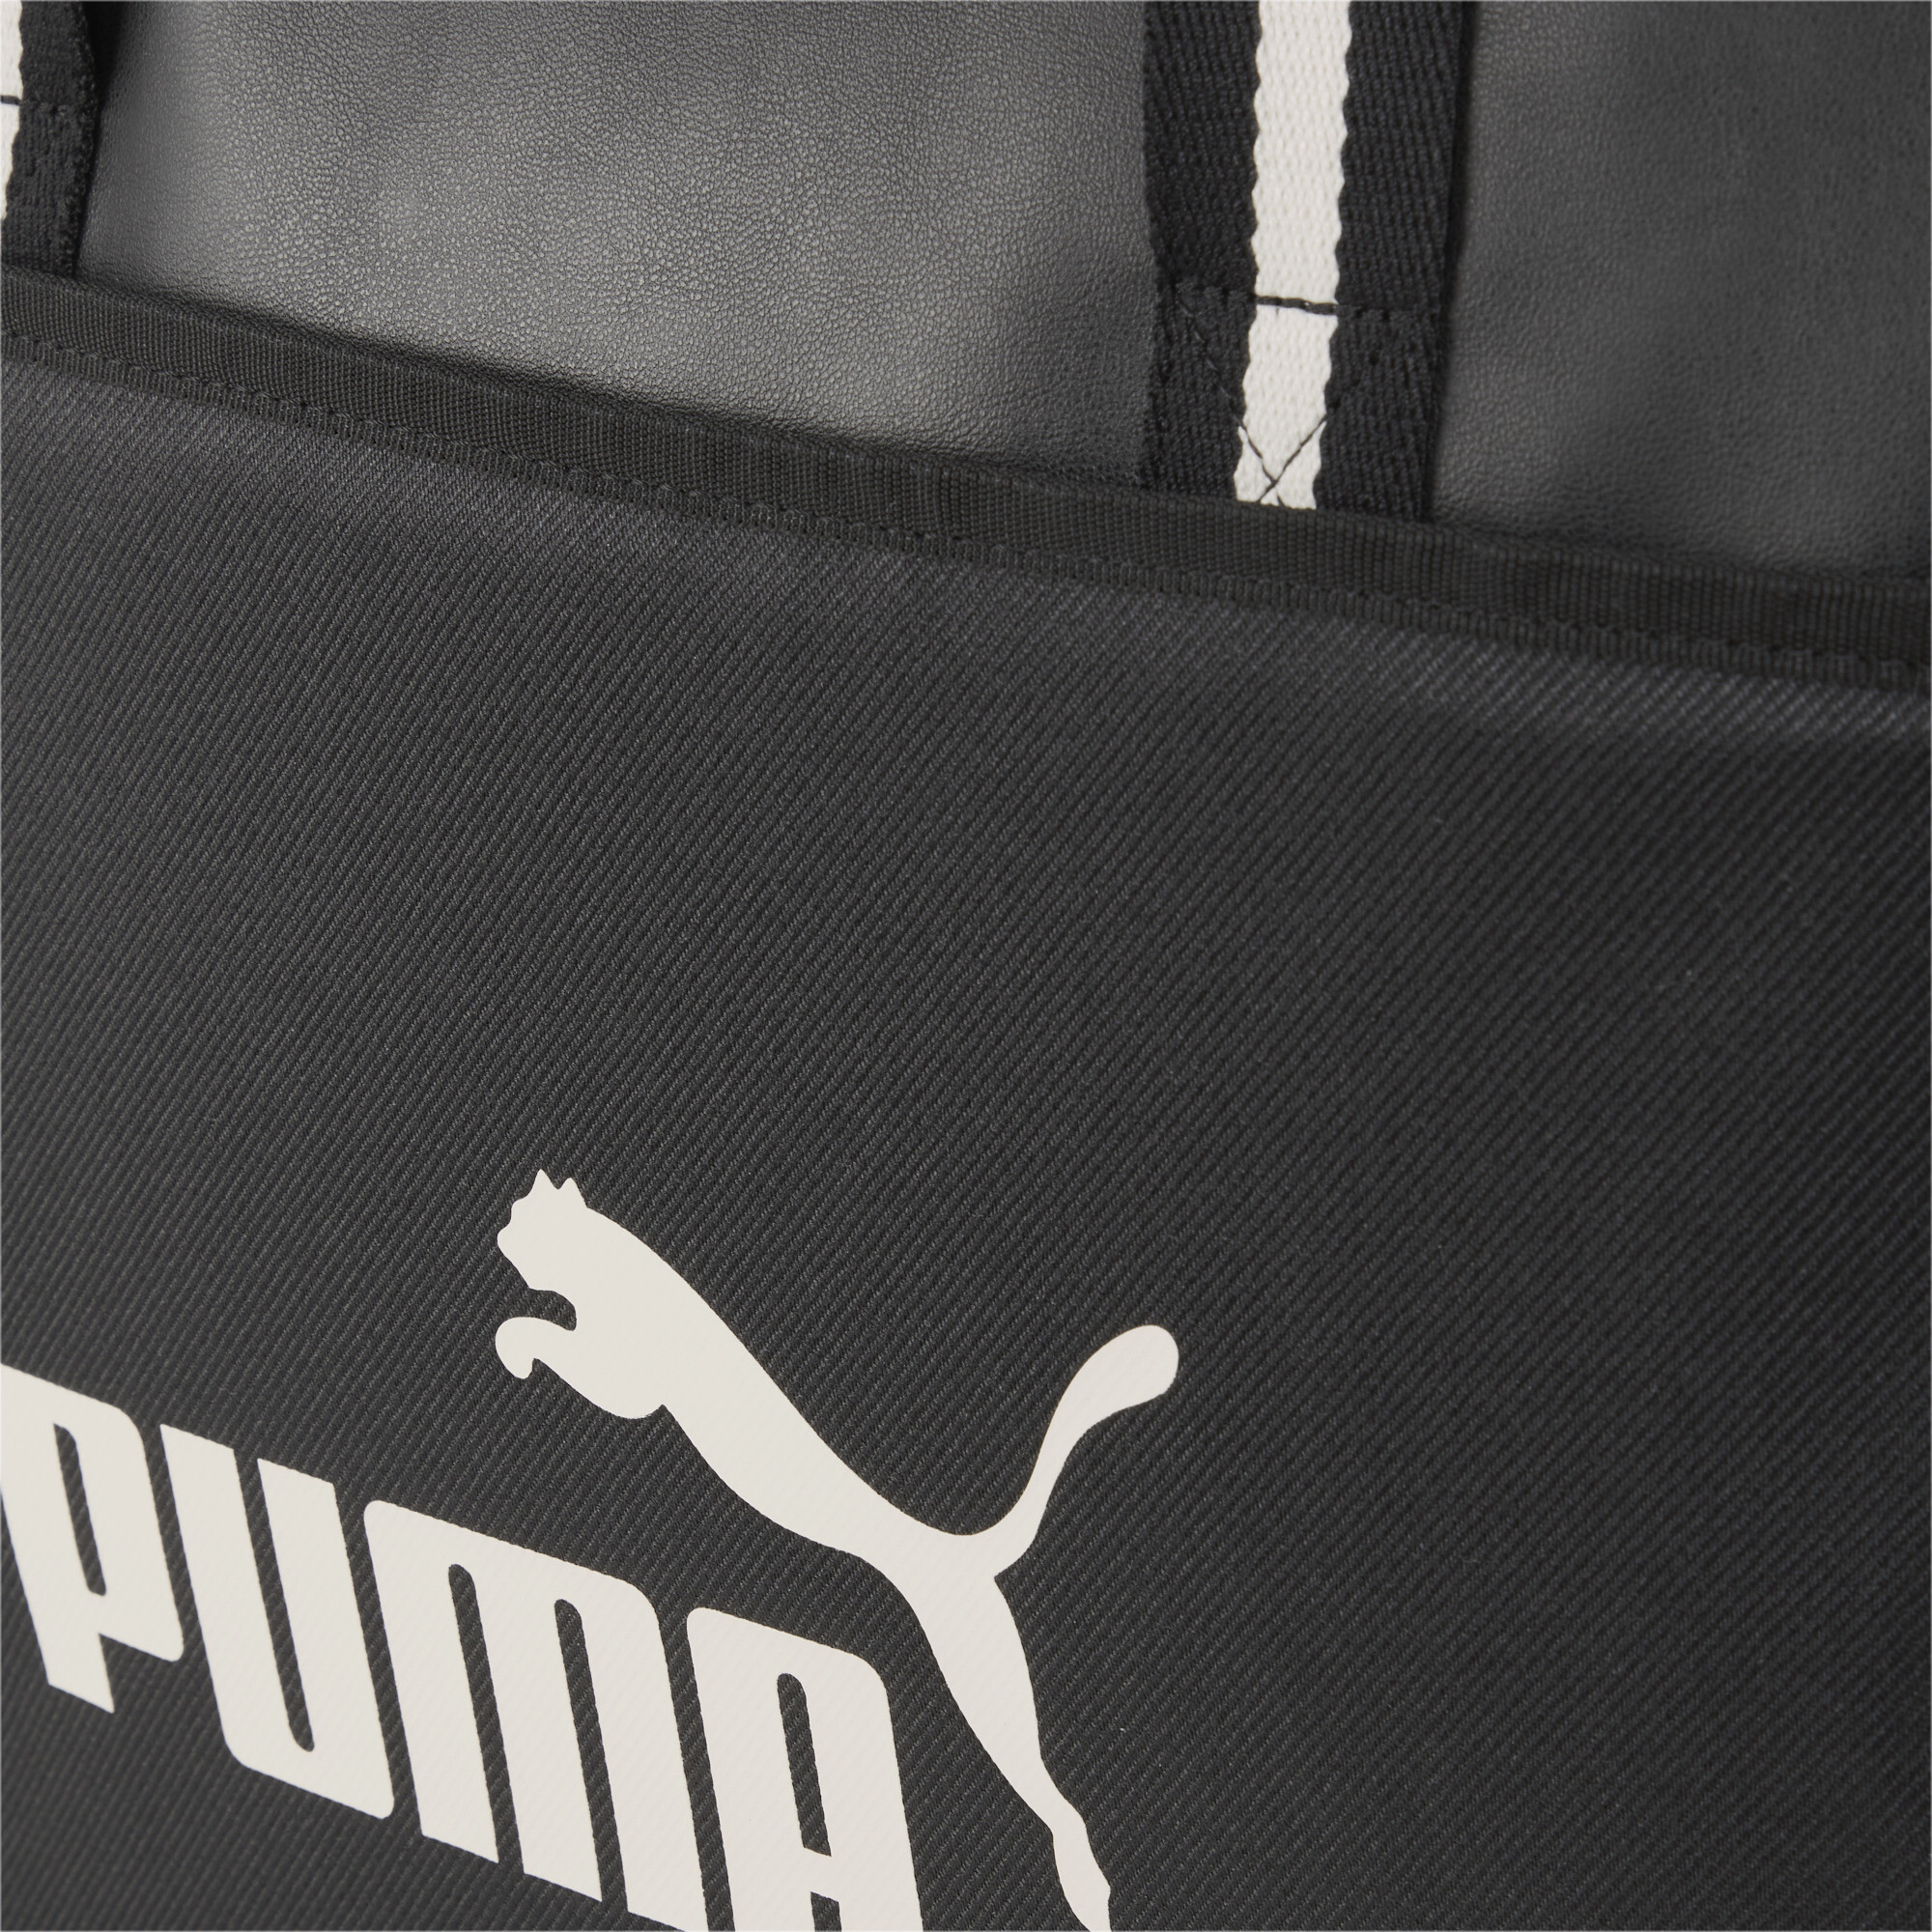 Puma Campus Shopper Bag, Black, Accessories